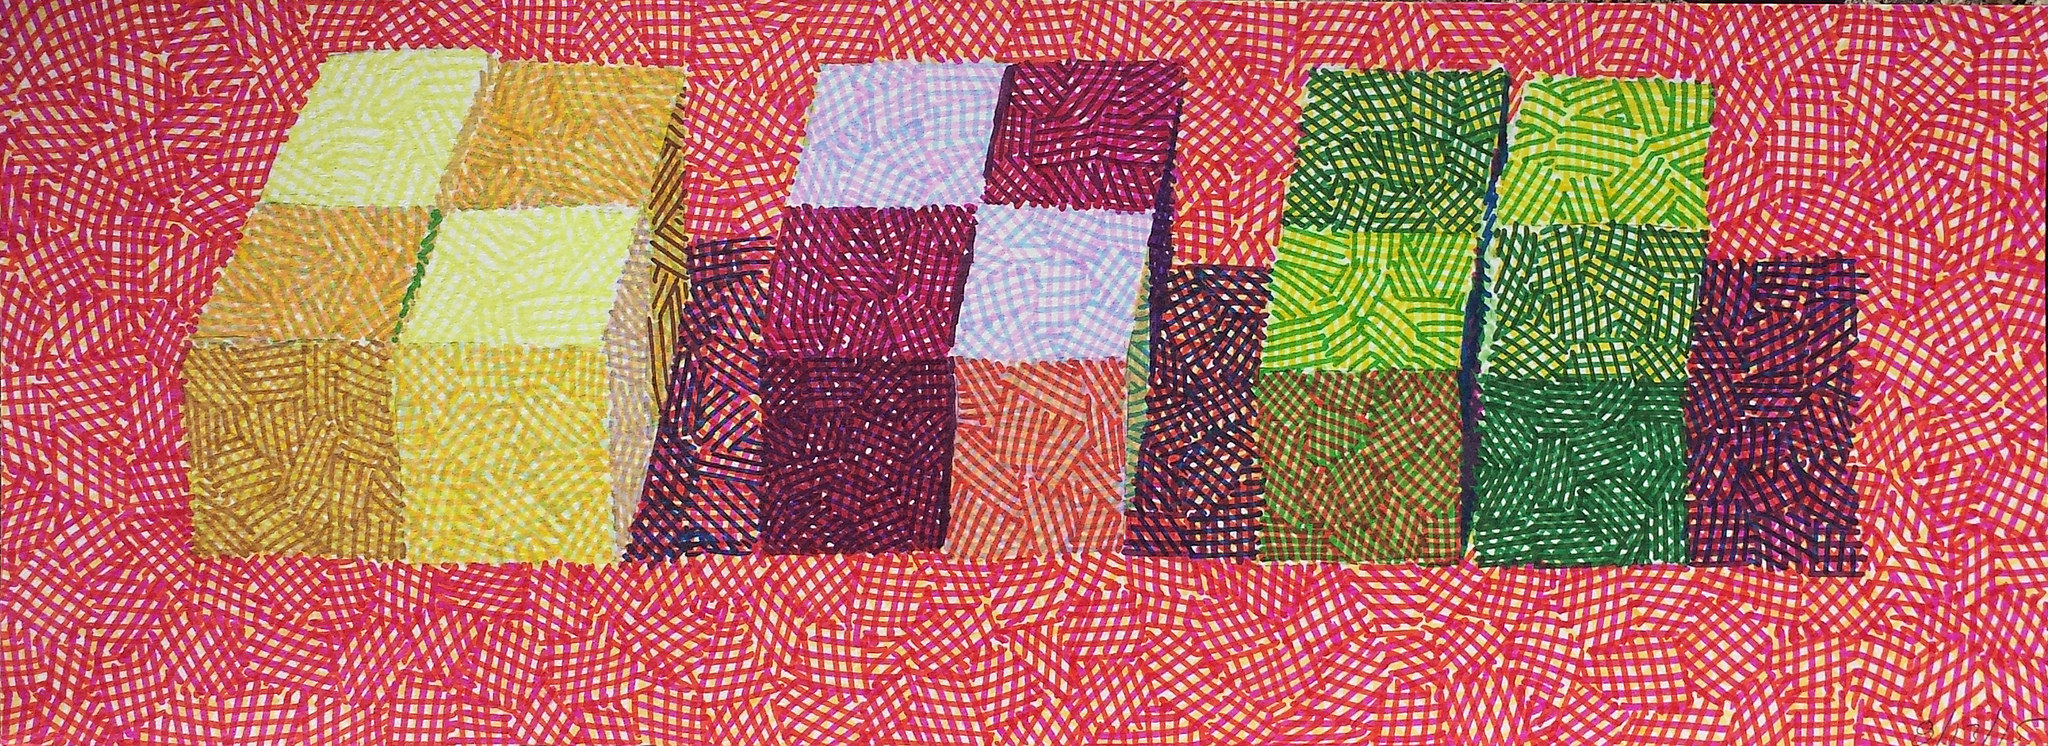 Twelve Colored Paper Cubes, 2014